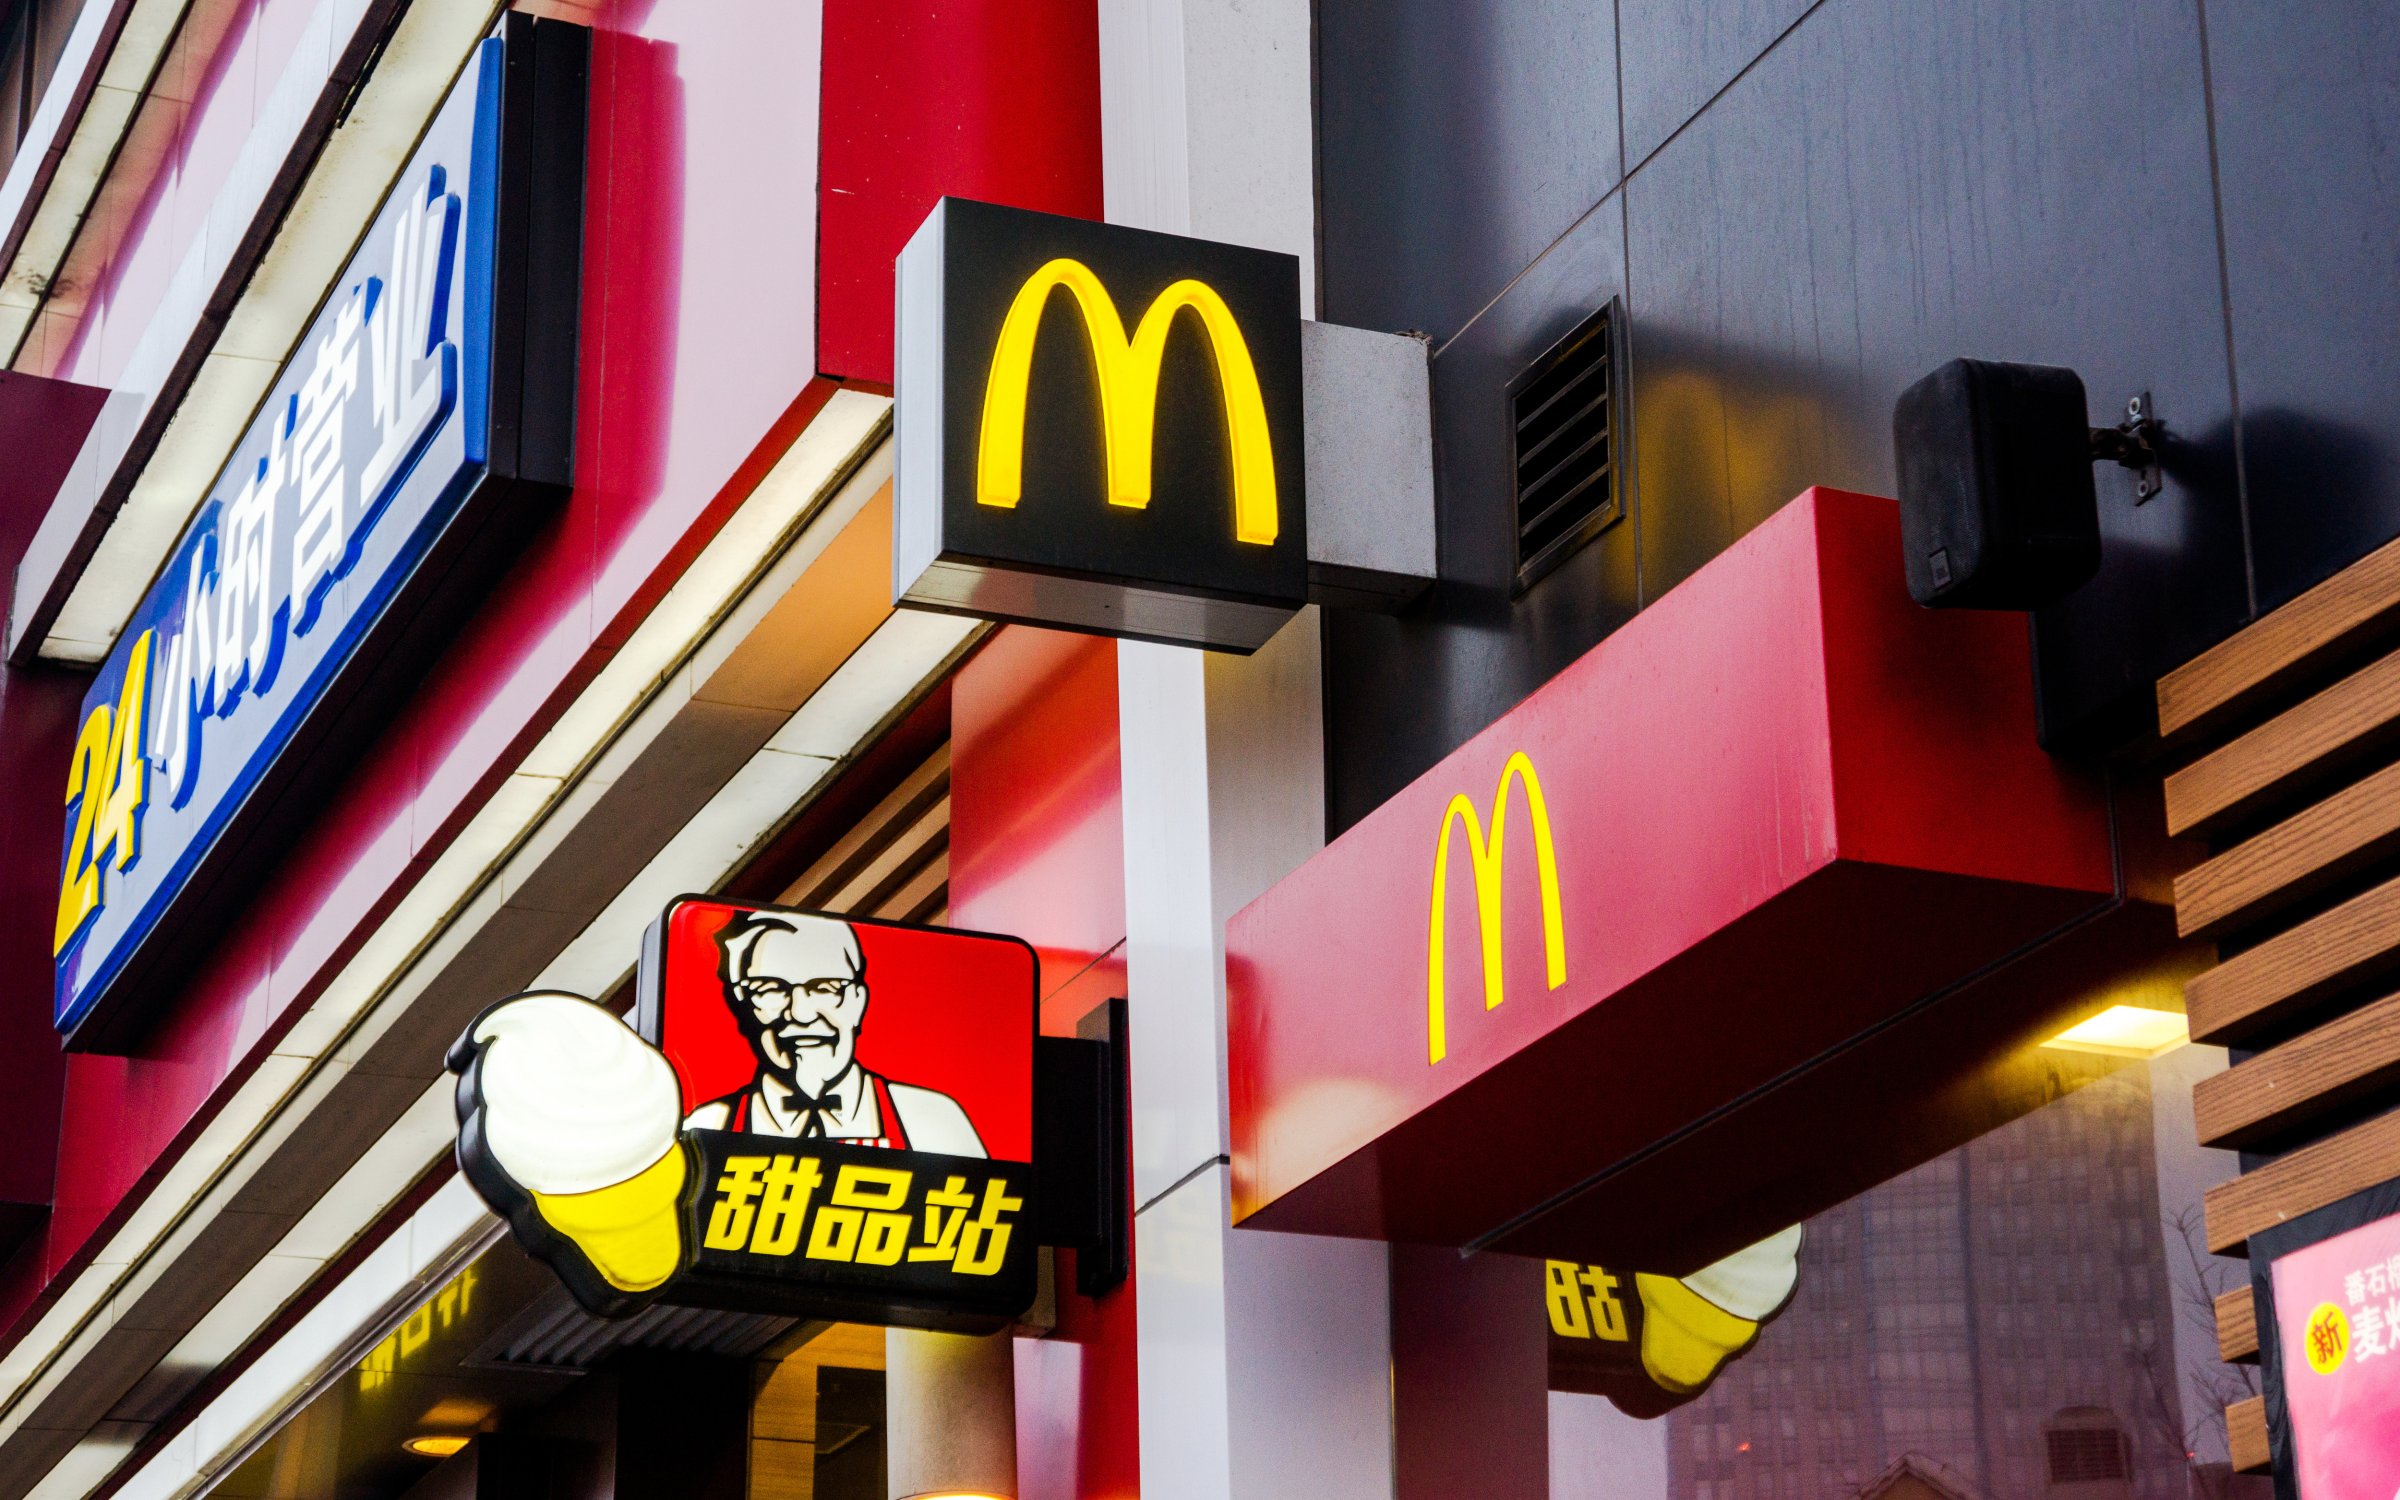 A 24 hour McDonalds restaurant in a shopping mall. KFC,